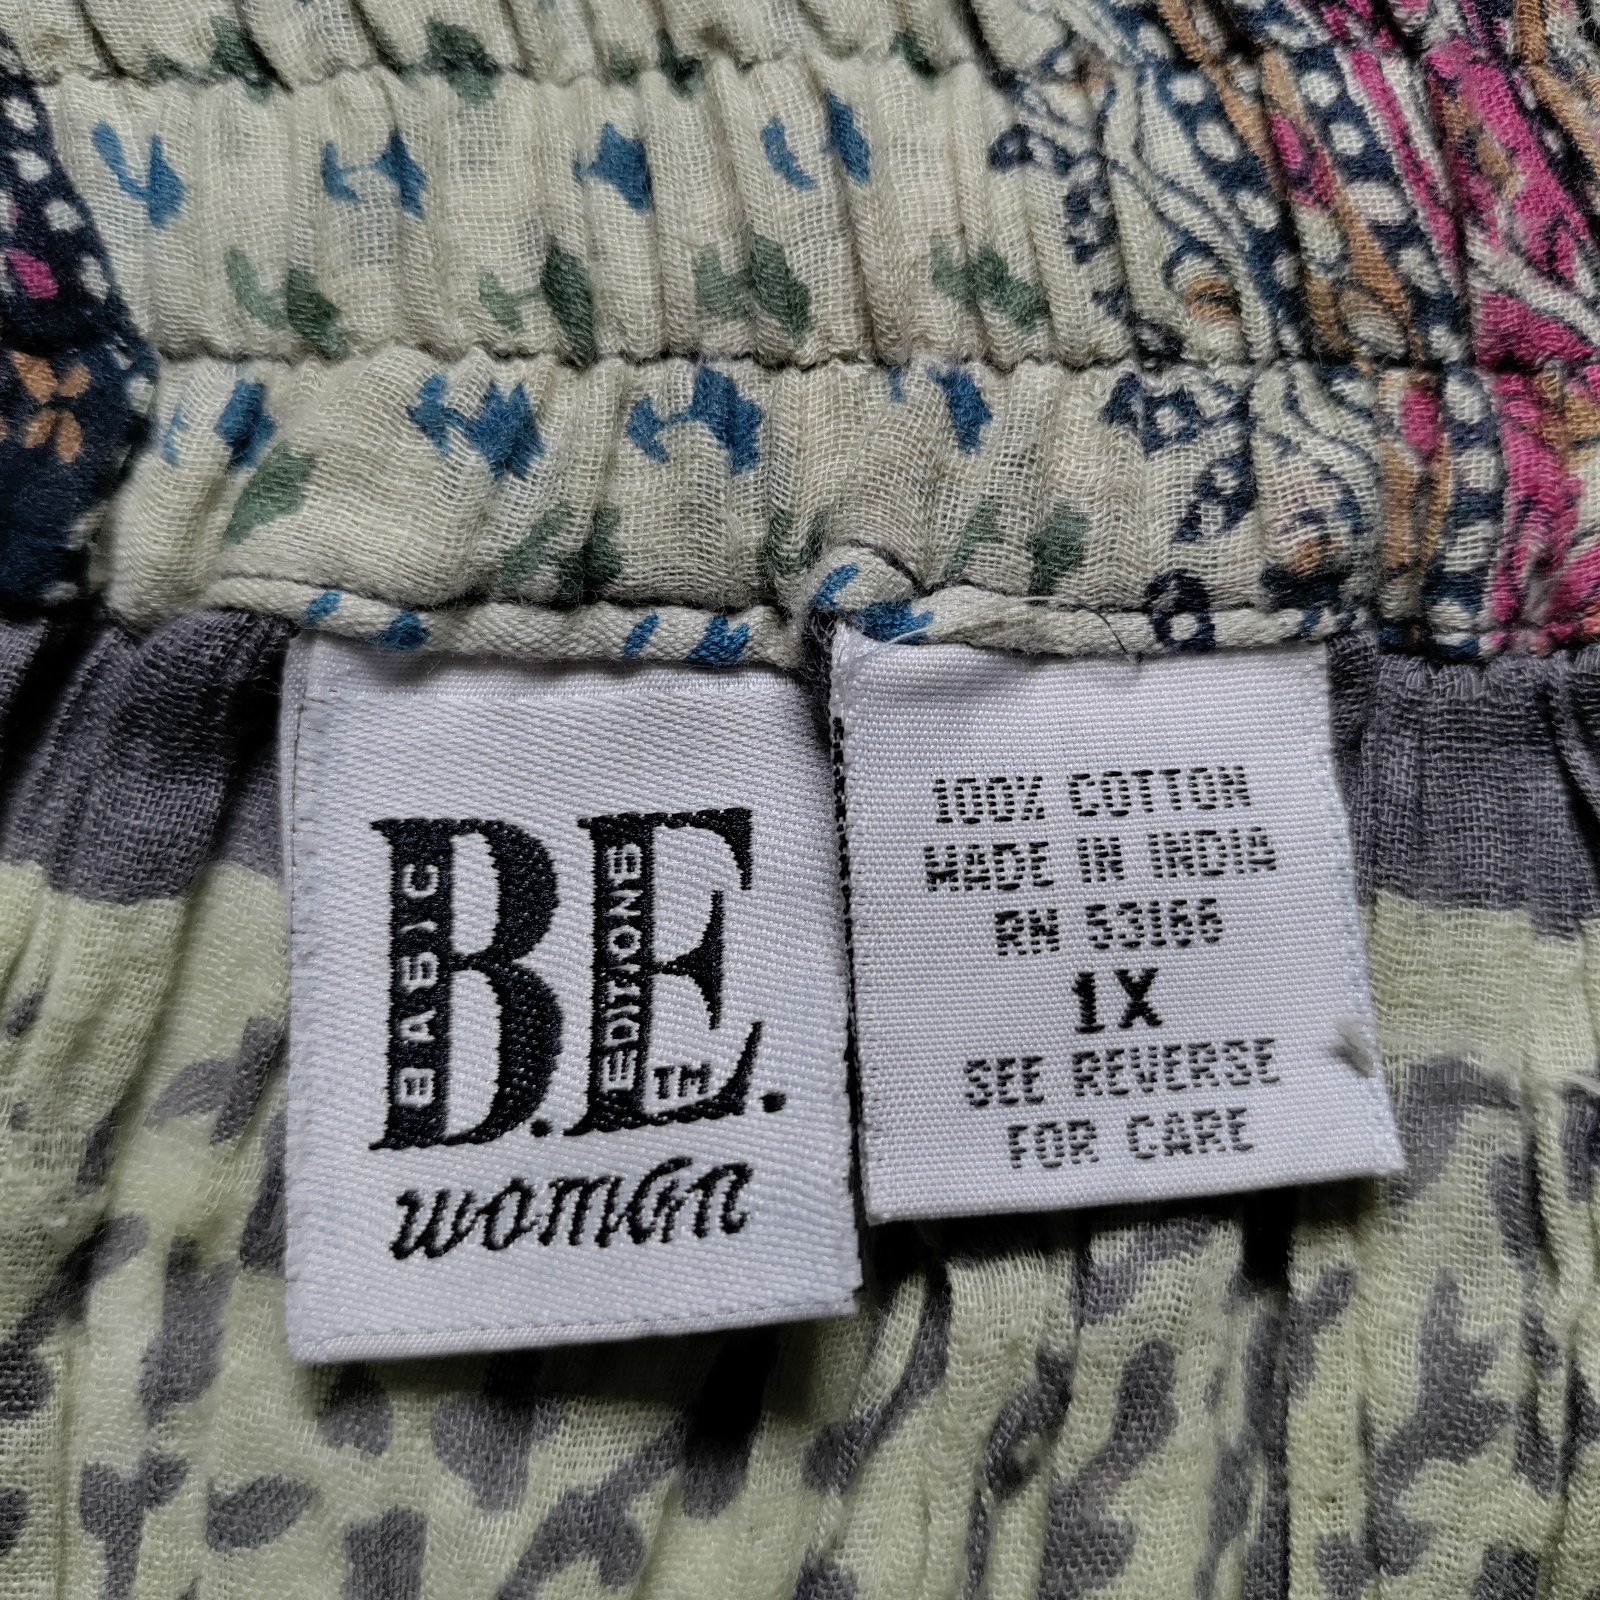 Discounted Basic Editions Boho Bohemian Maxi Skirt Womens 1X Maroon Gray Elastic Drawstring mtUookWFQ for sale